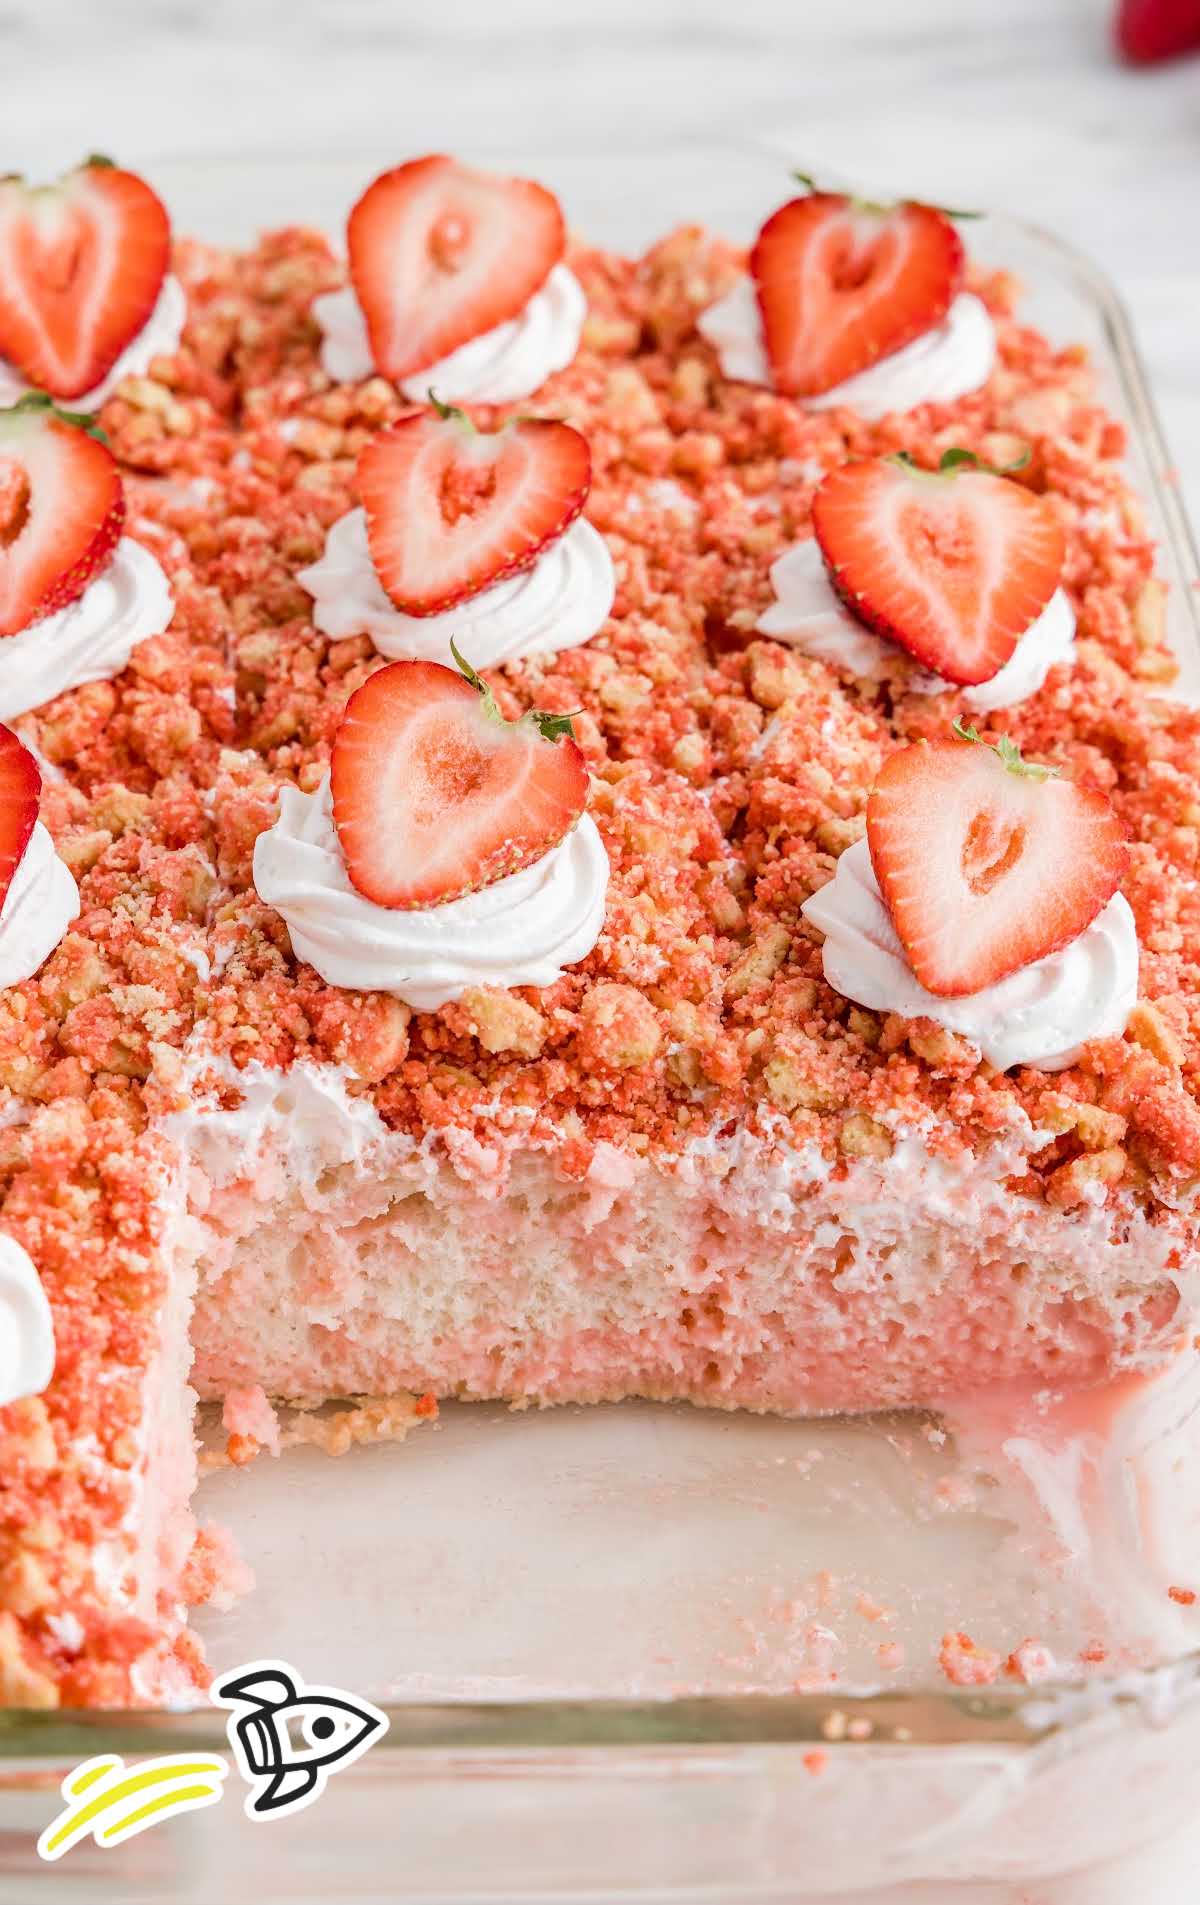 Strawberry Crunch Poke Cake